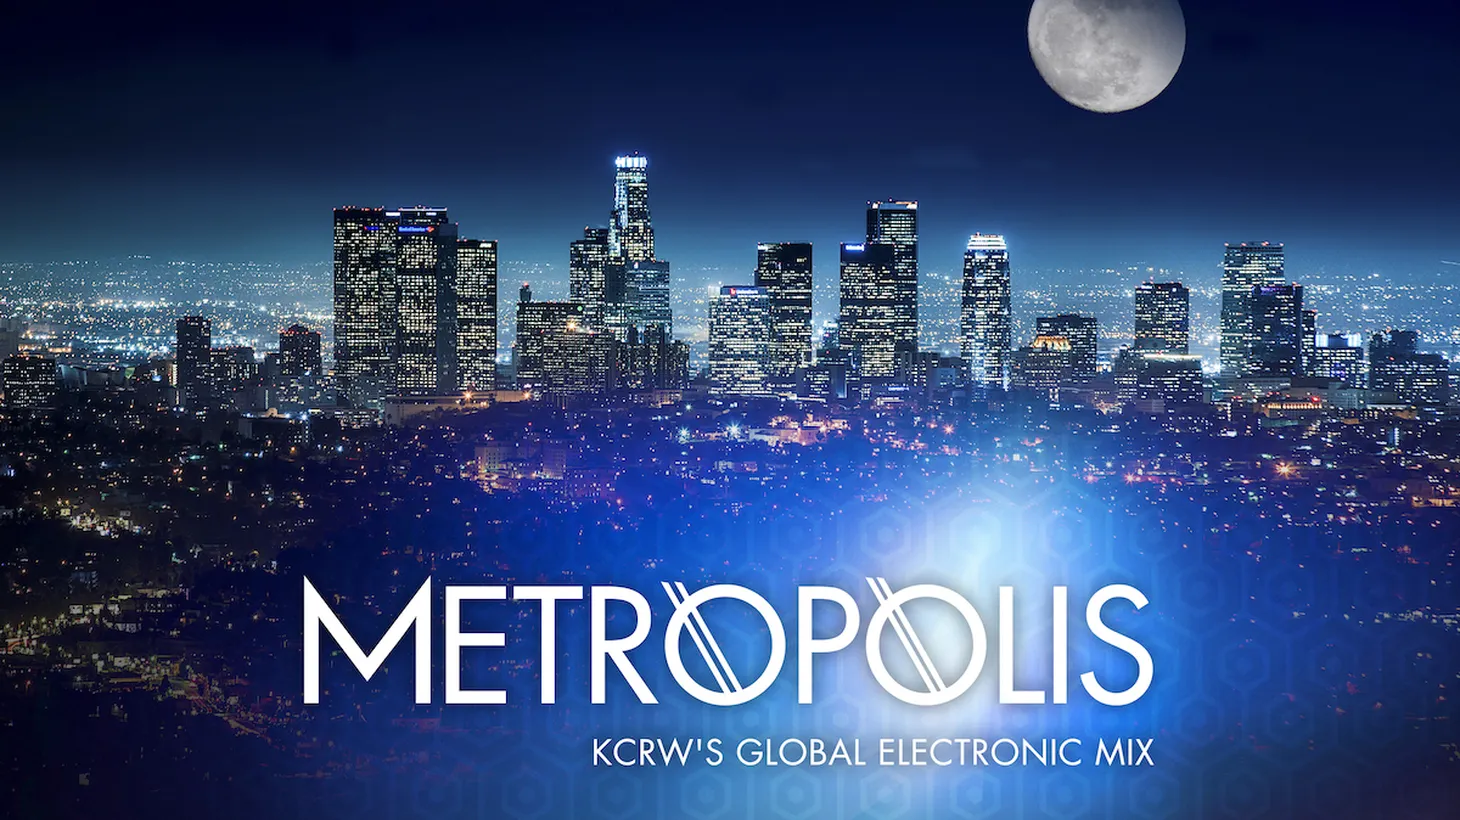 Metropolis playlist, February 5, 2022.